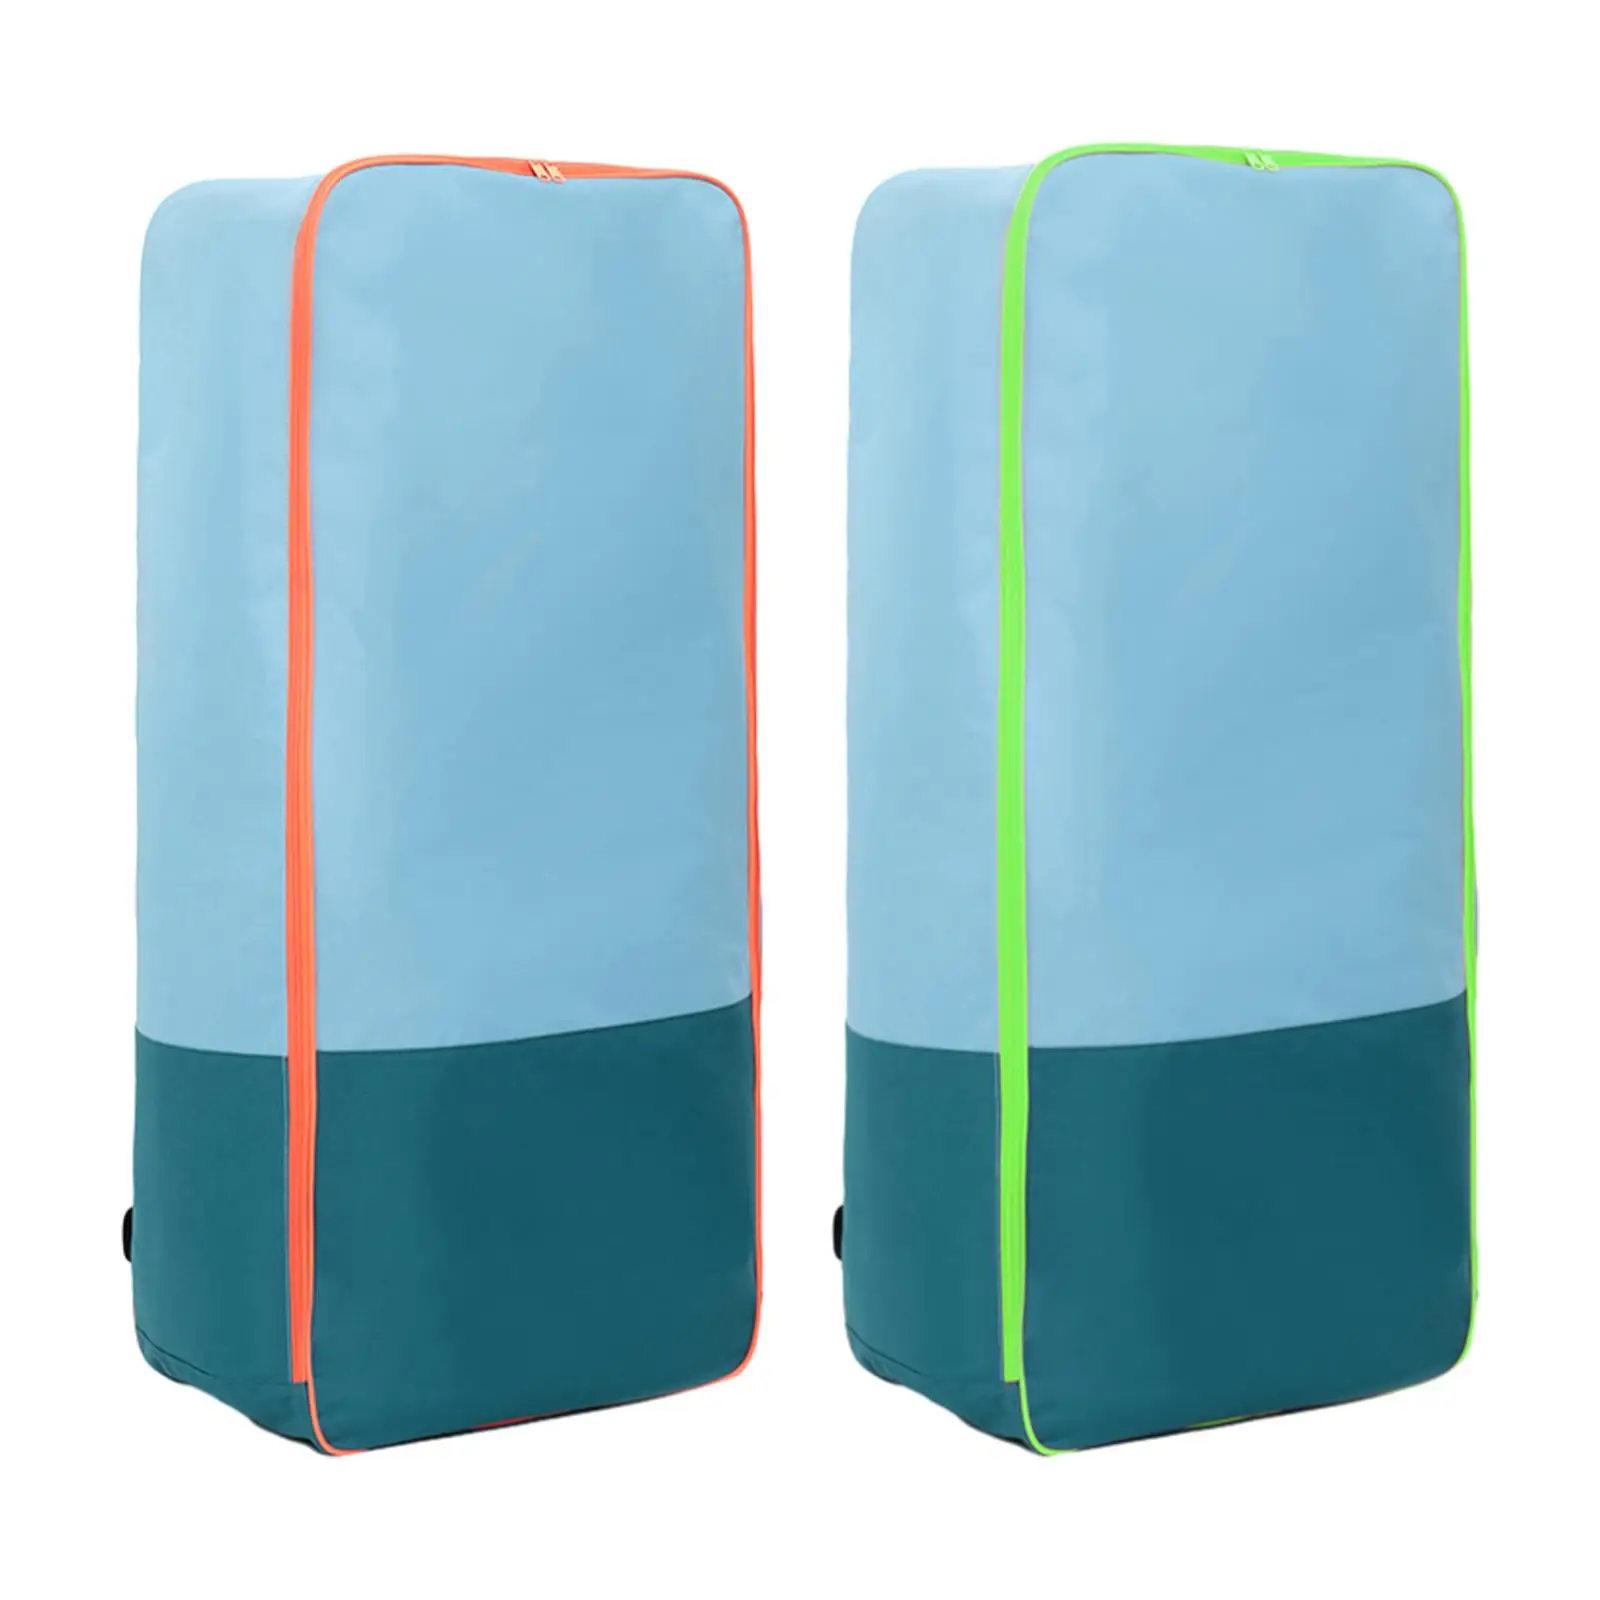 Inflatable Paddleboard Backpack Storage Bag Organizer Board Travel Bag for Water